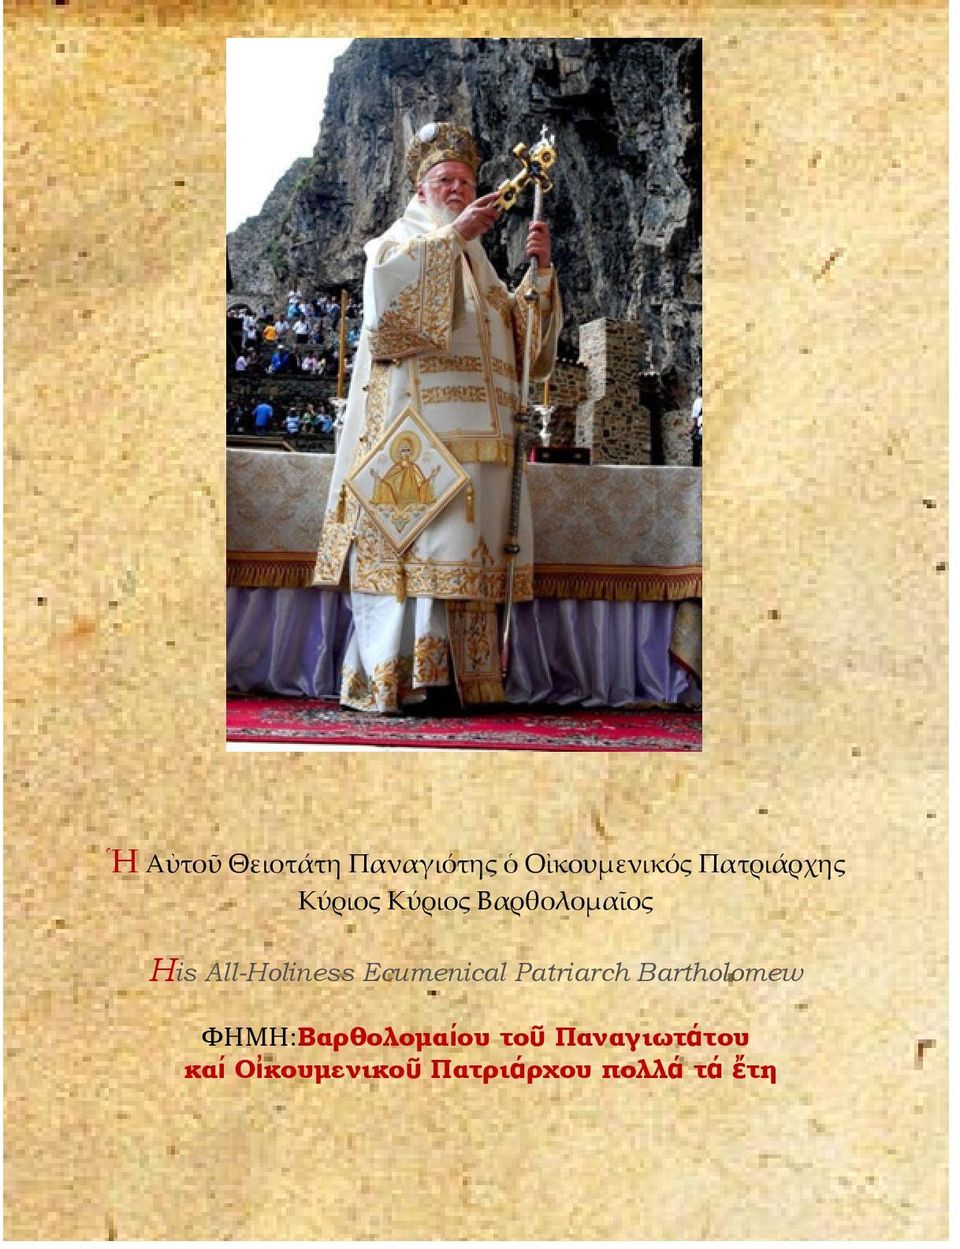 All-Holiness Ecumenical Patriarch Bartholomew